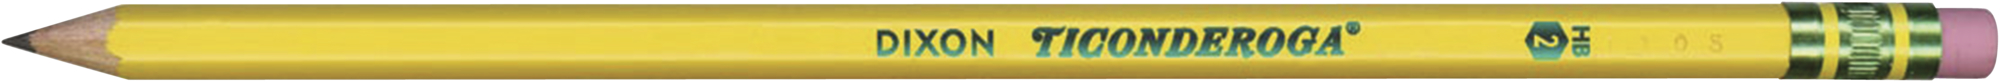 Ticonderoga Original Pencils, No 2, Yellow, Pack of 96